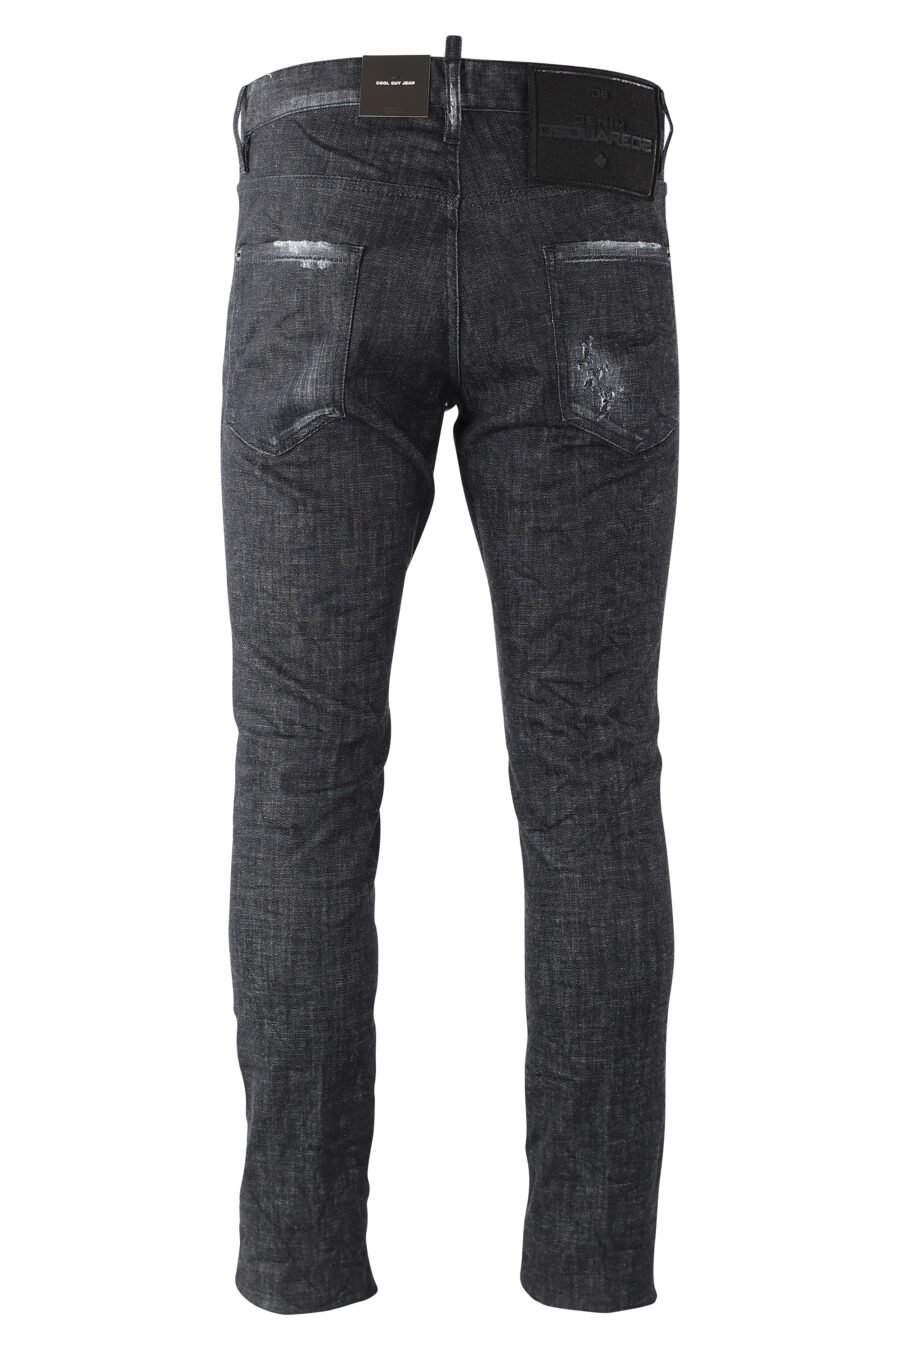 Coole Jeanshose schwarz semi-getragen - IMG 9701